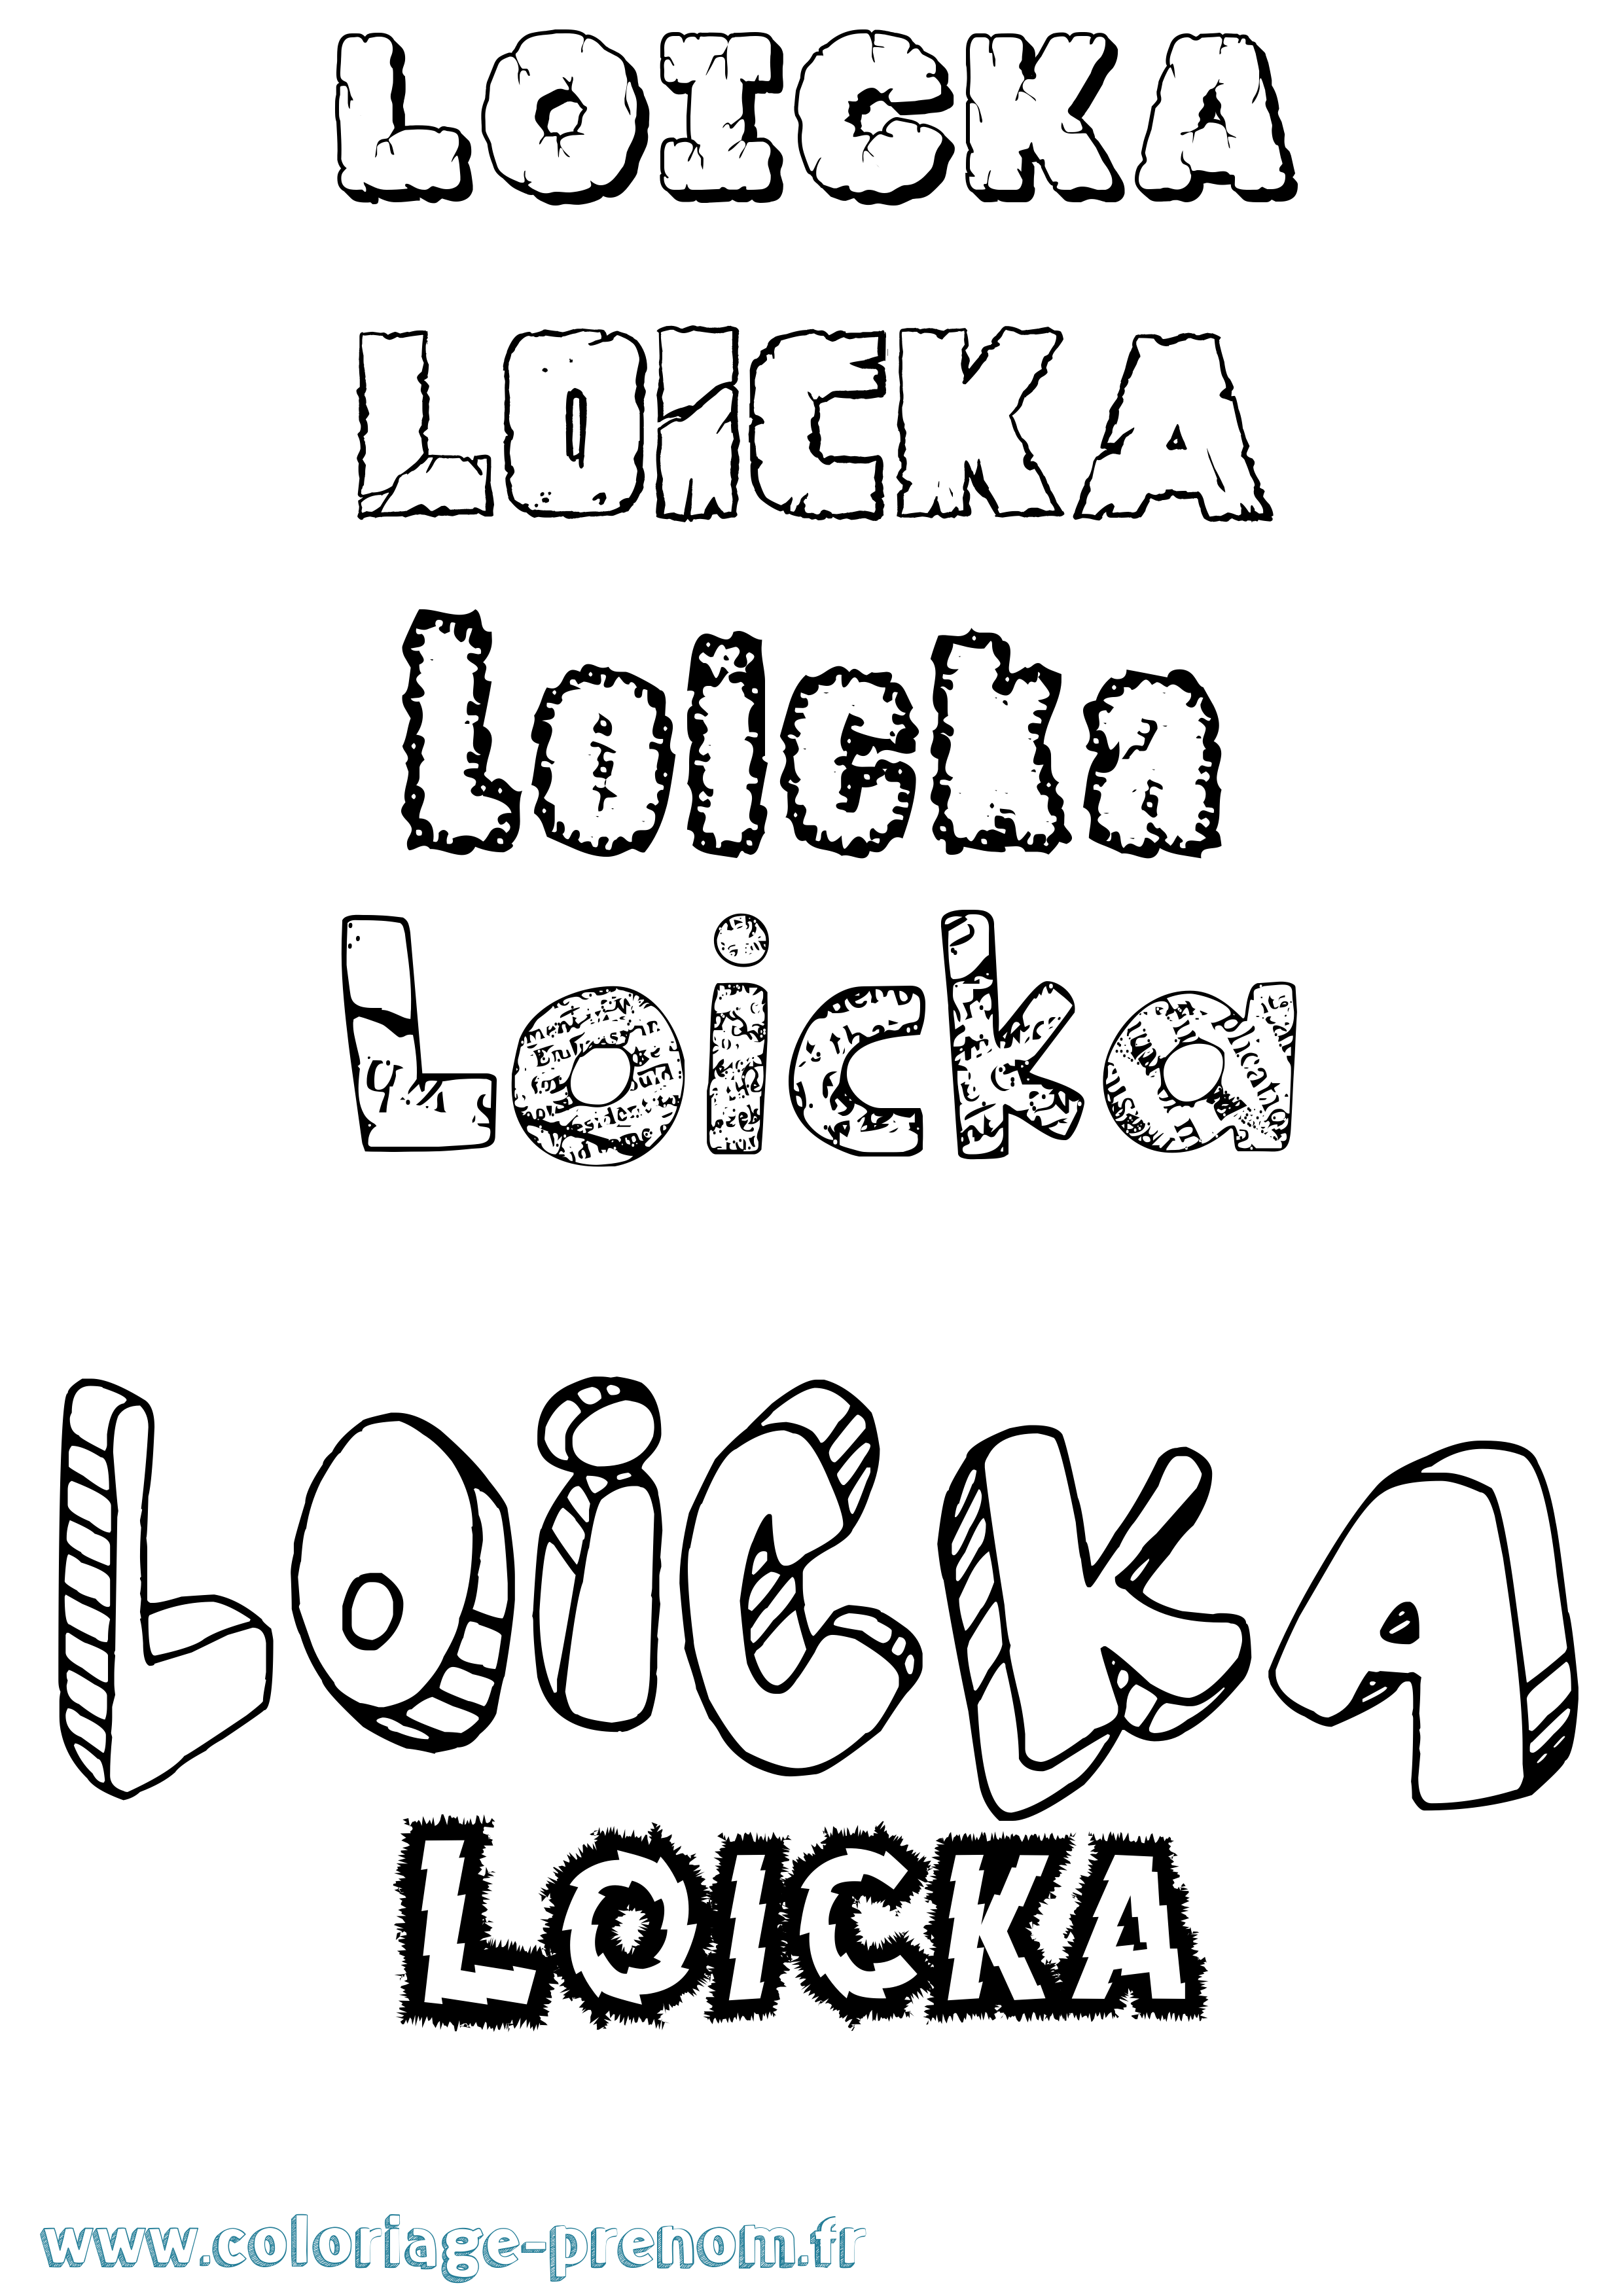 Coloriage prénom Loicka Destructuré